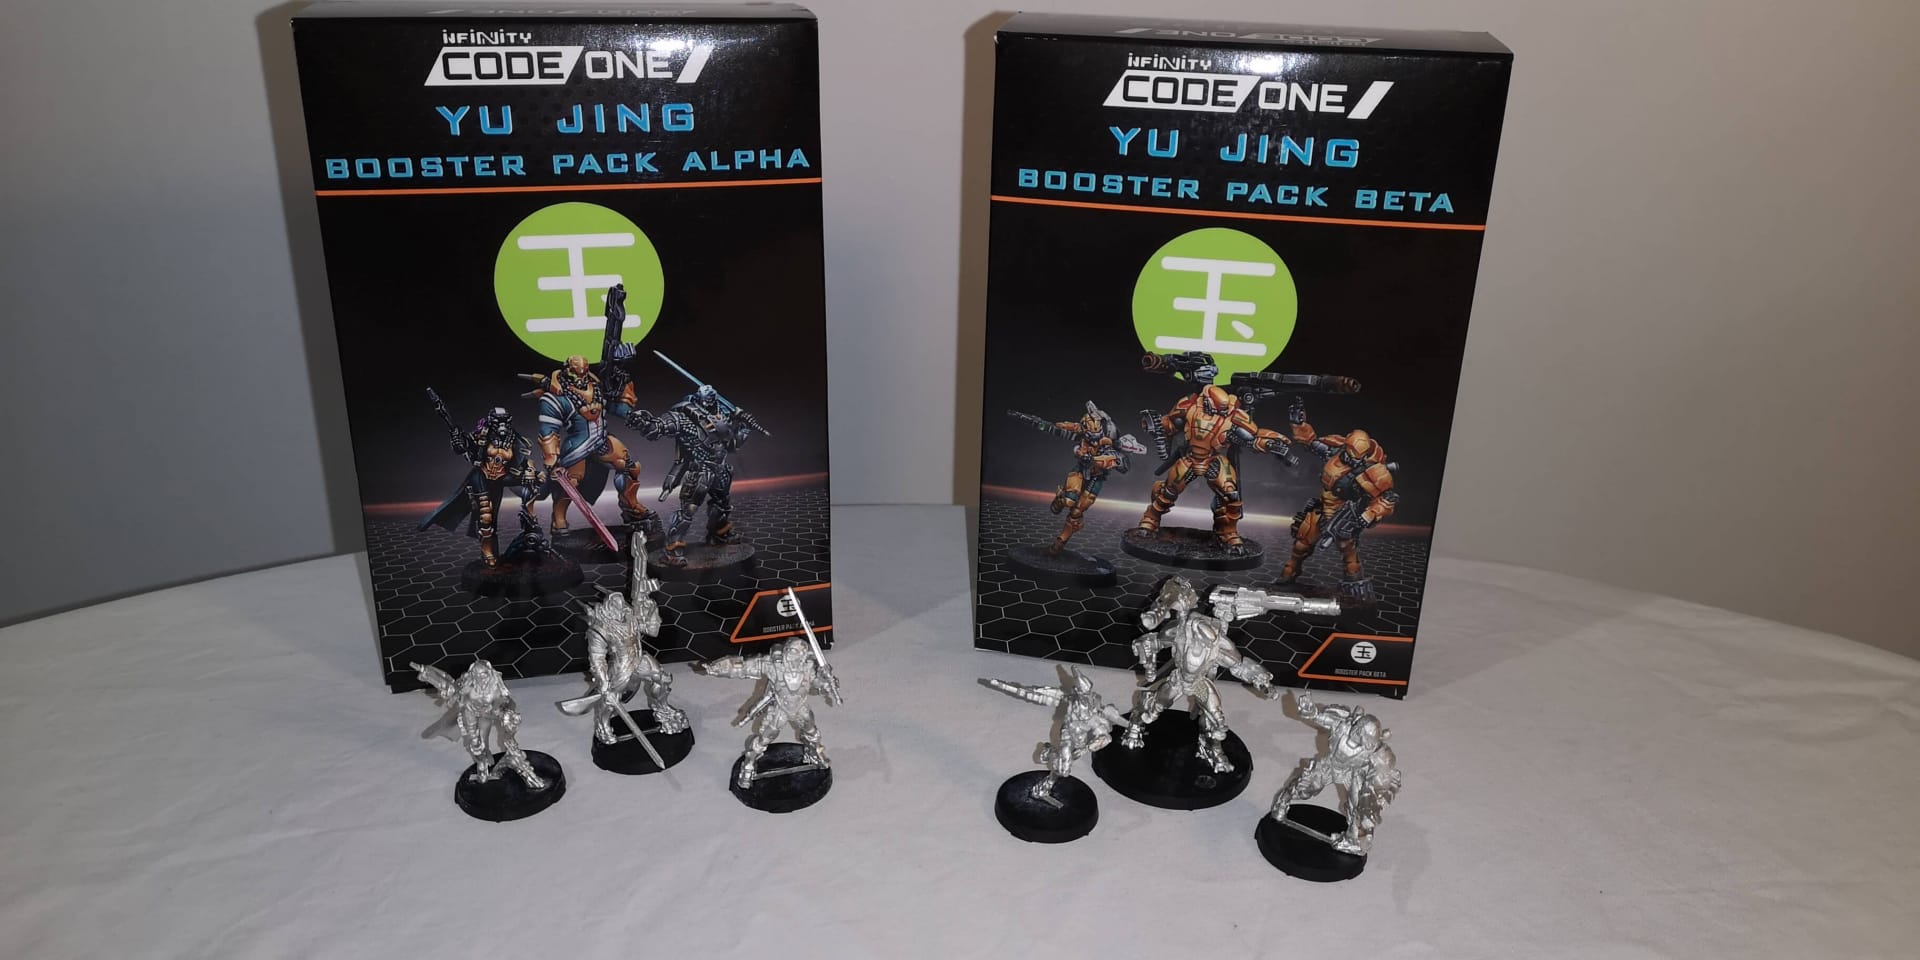 Infinity CodeOne Yu Jing Booster Pack Alpha and Beta.